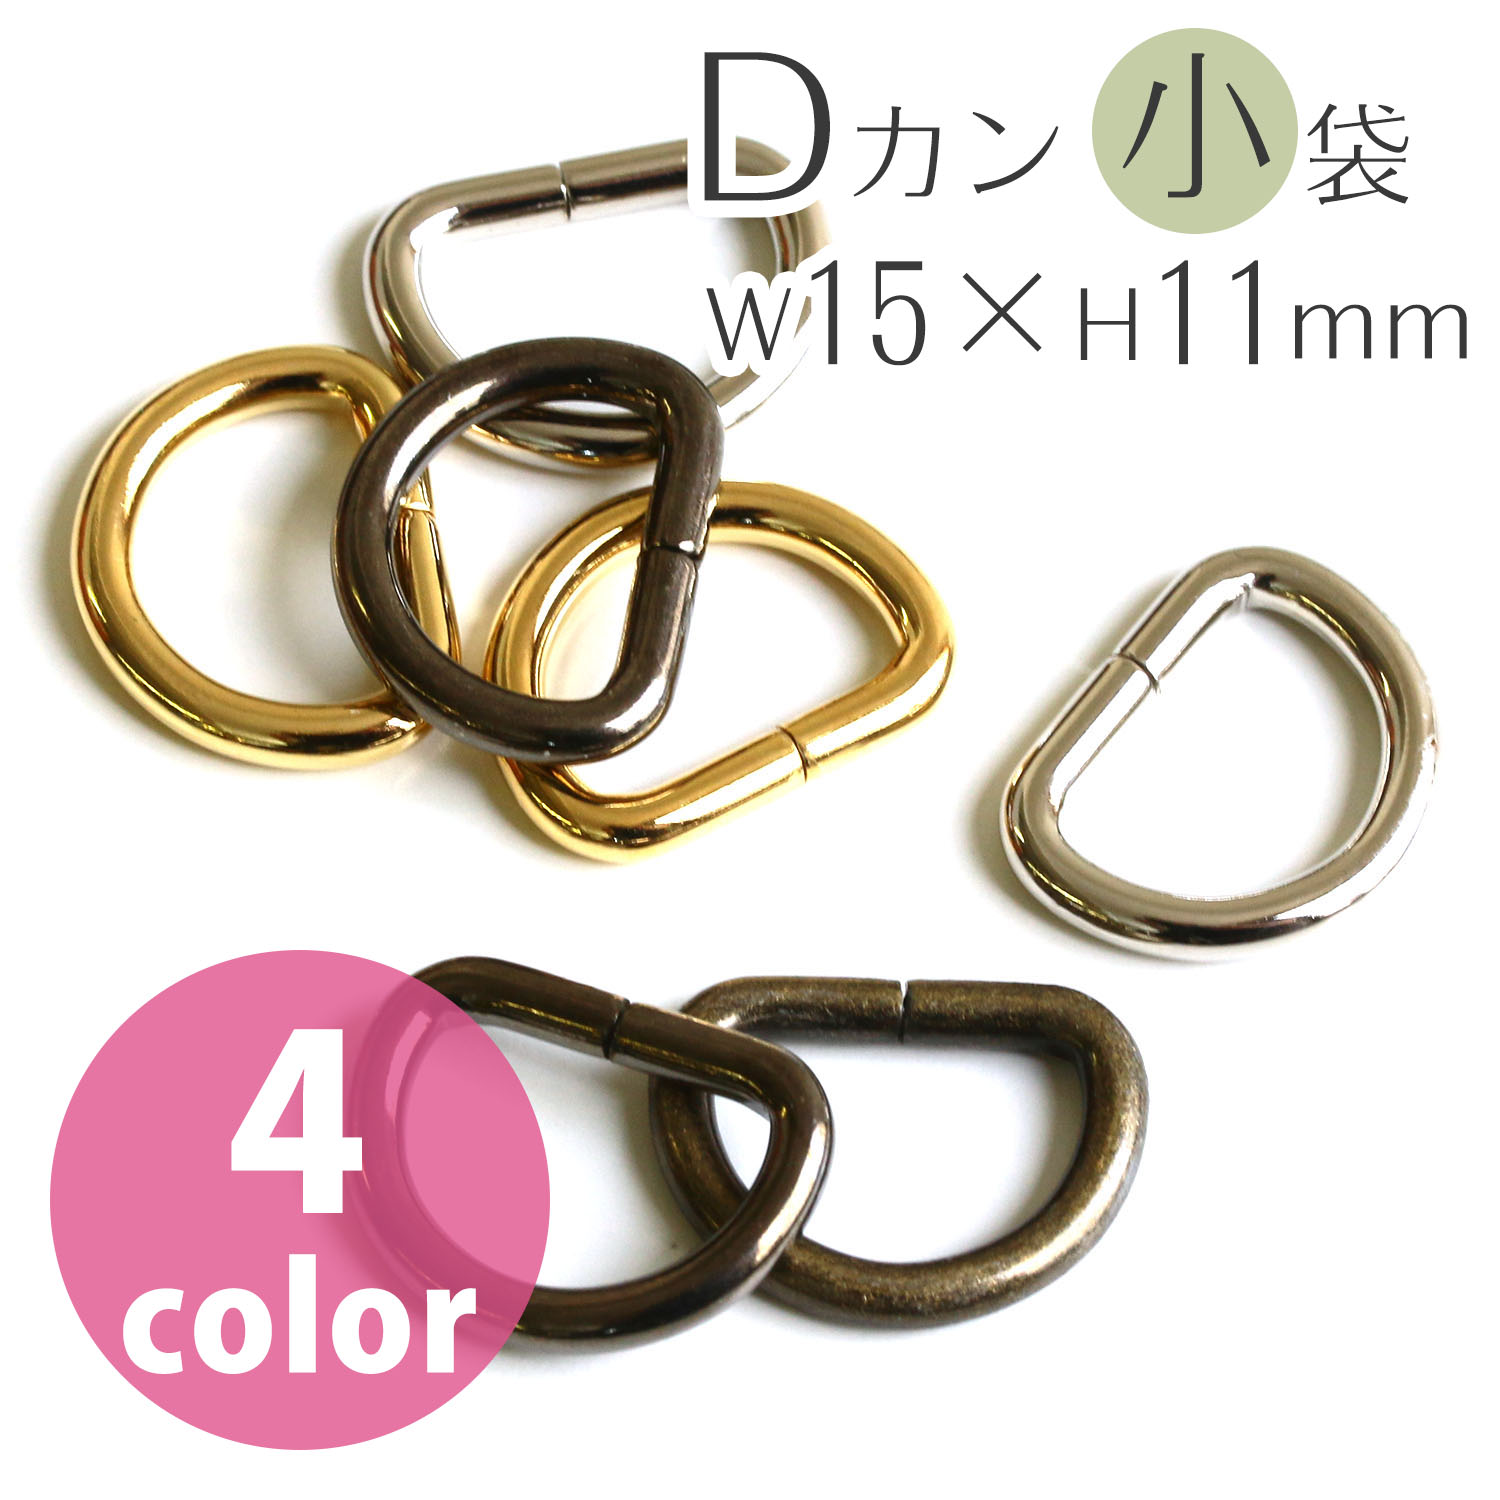 S22 D-Ring 15 x 11mm", diameter 3mm (bag)